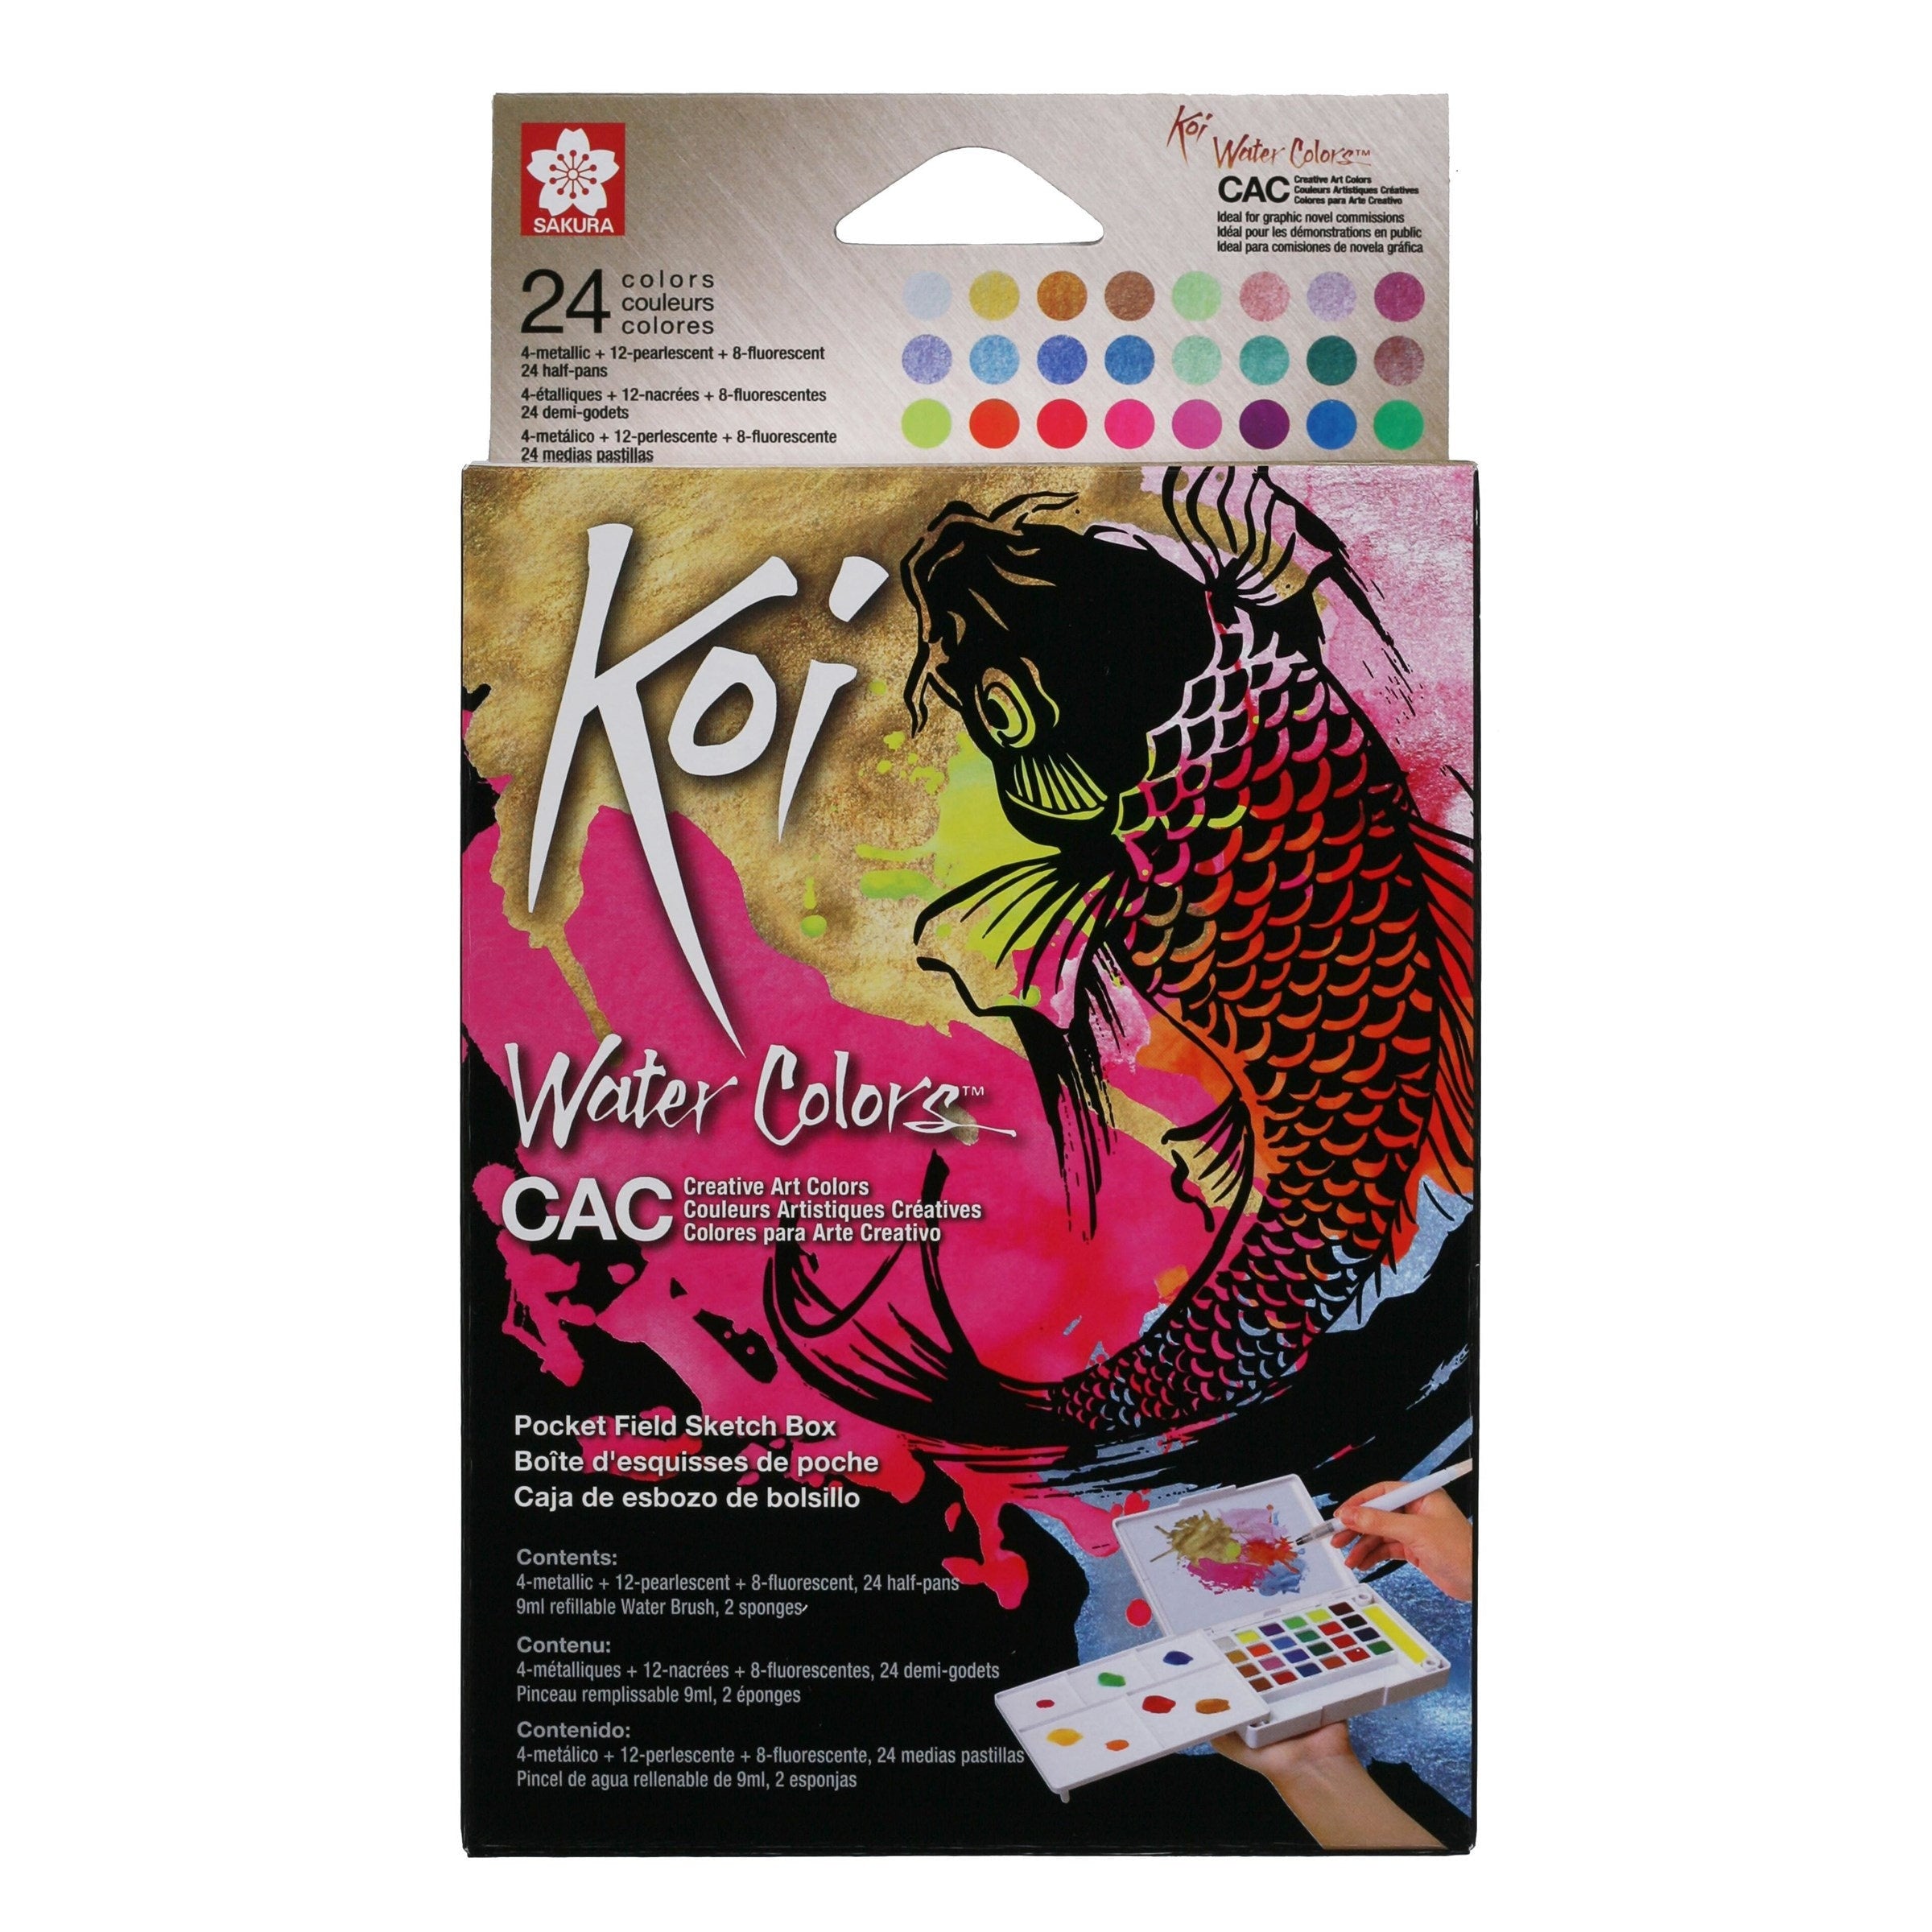 Koi Water Colors Studio Set, 96 half pans